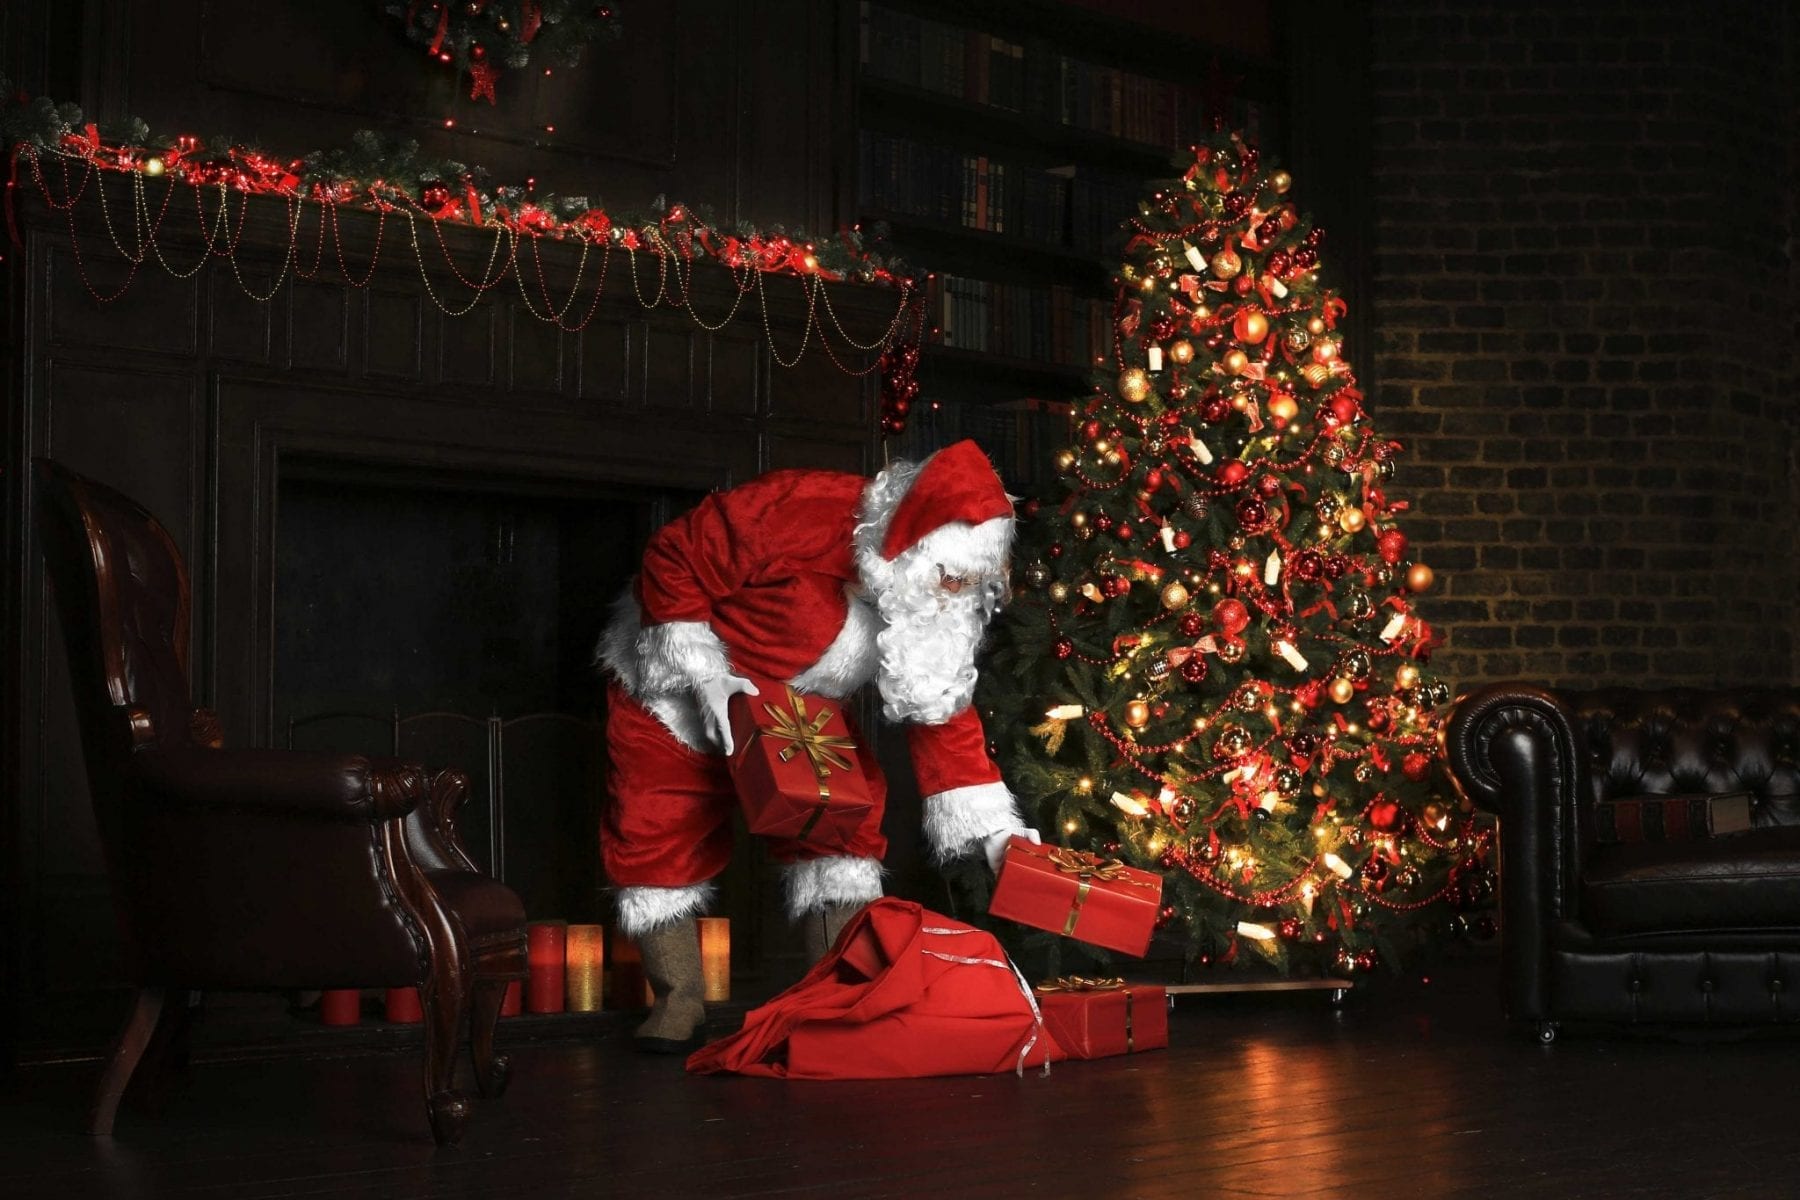 Santa placing presents under a Christmas tree